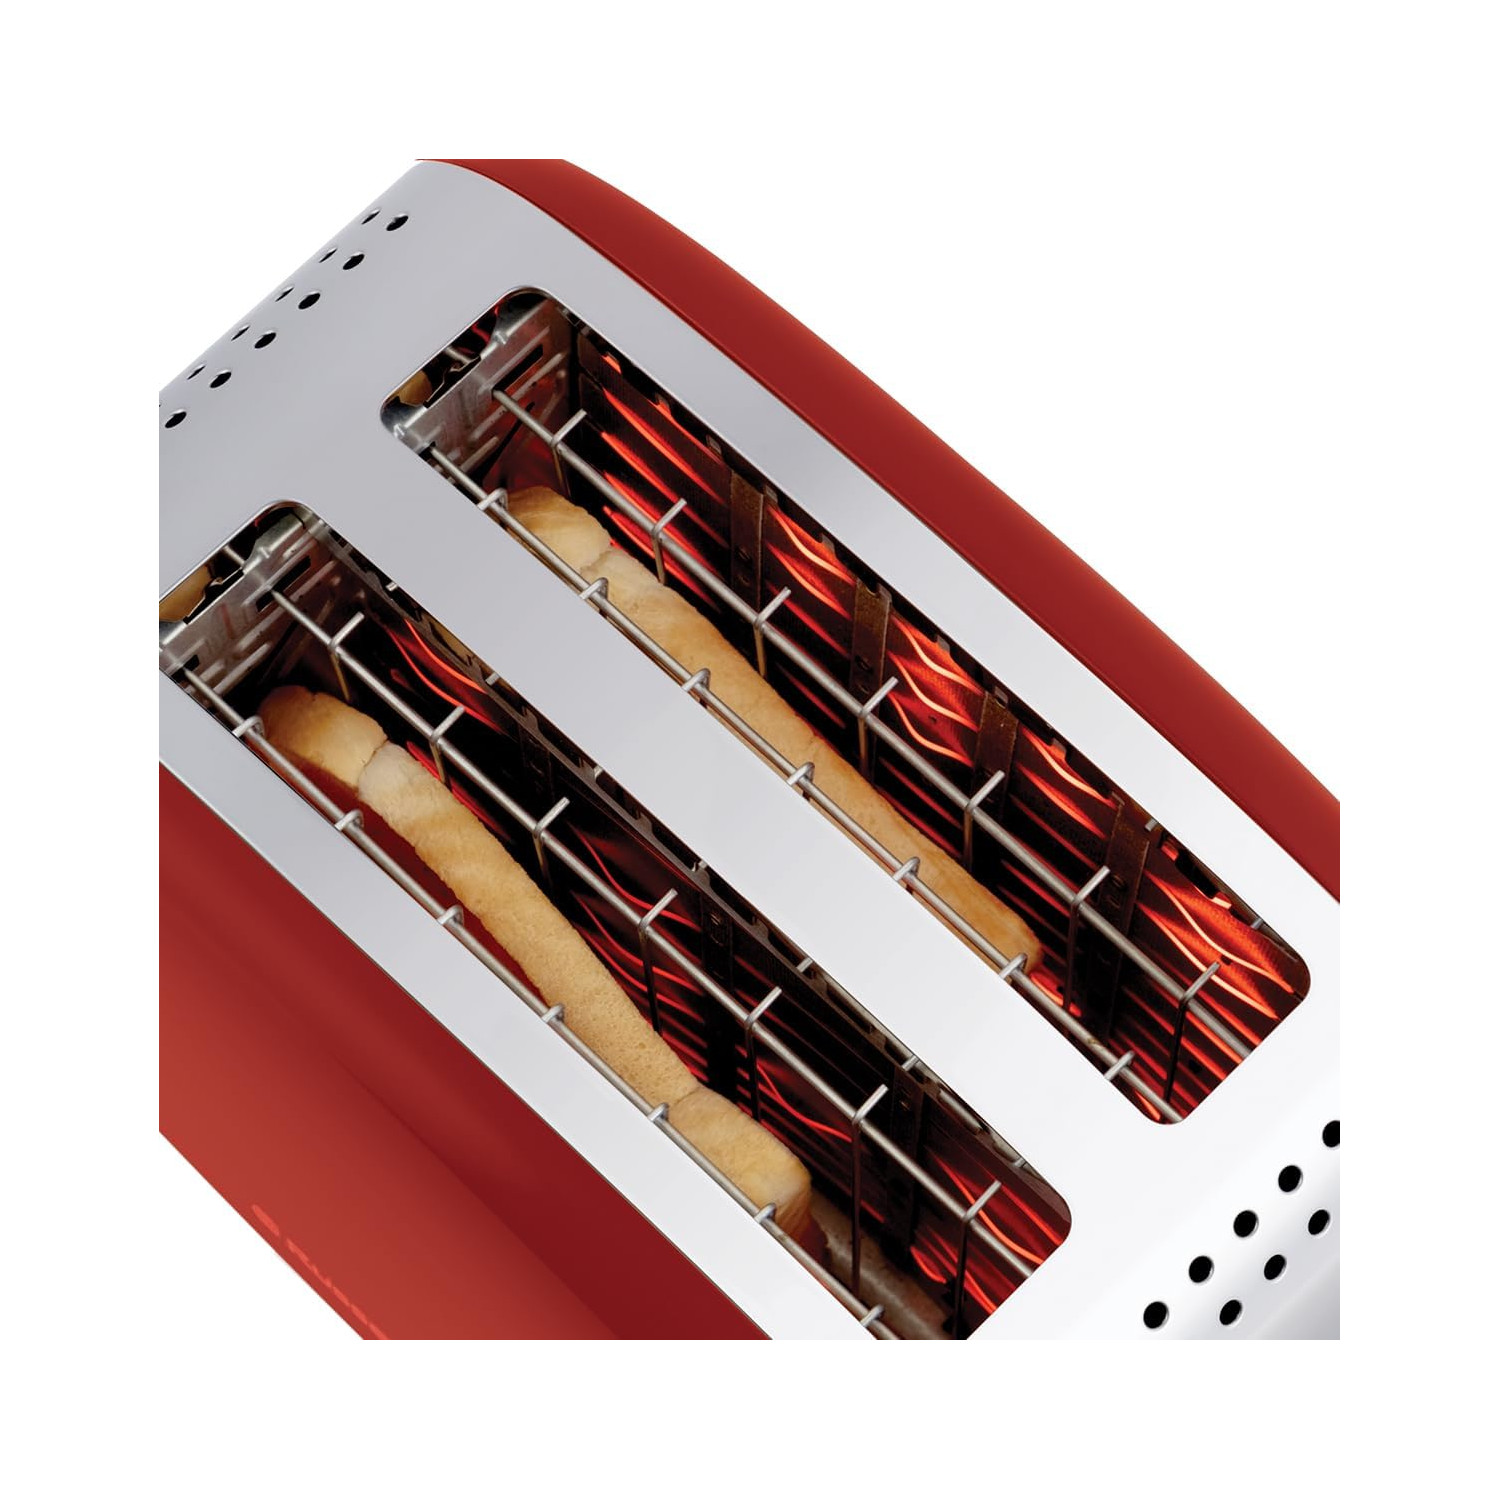 Schlitze: Plus Colours HOBBS 26554-56 Toaster Watt, RUSSELL 2) (1600 Rot Rot